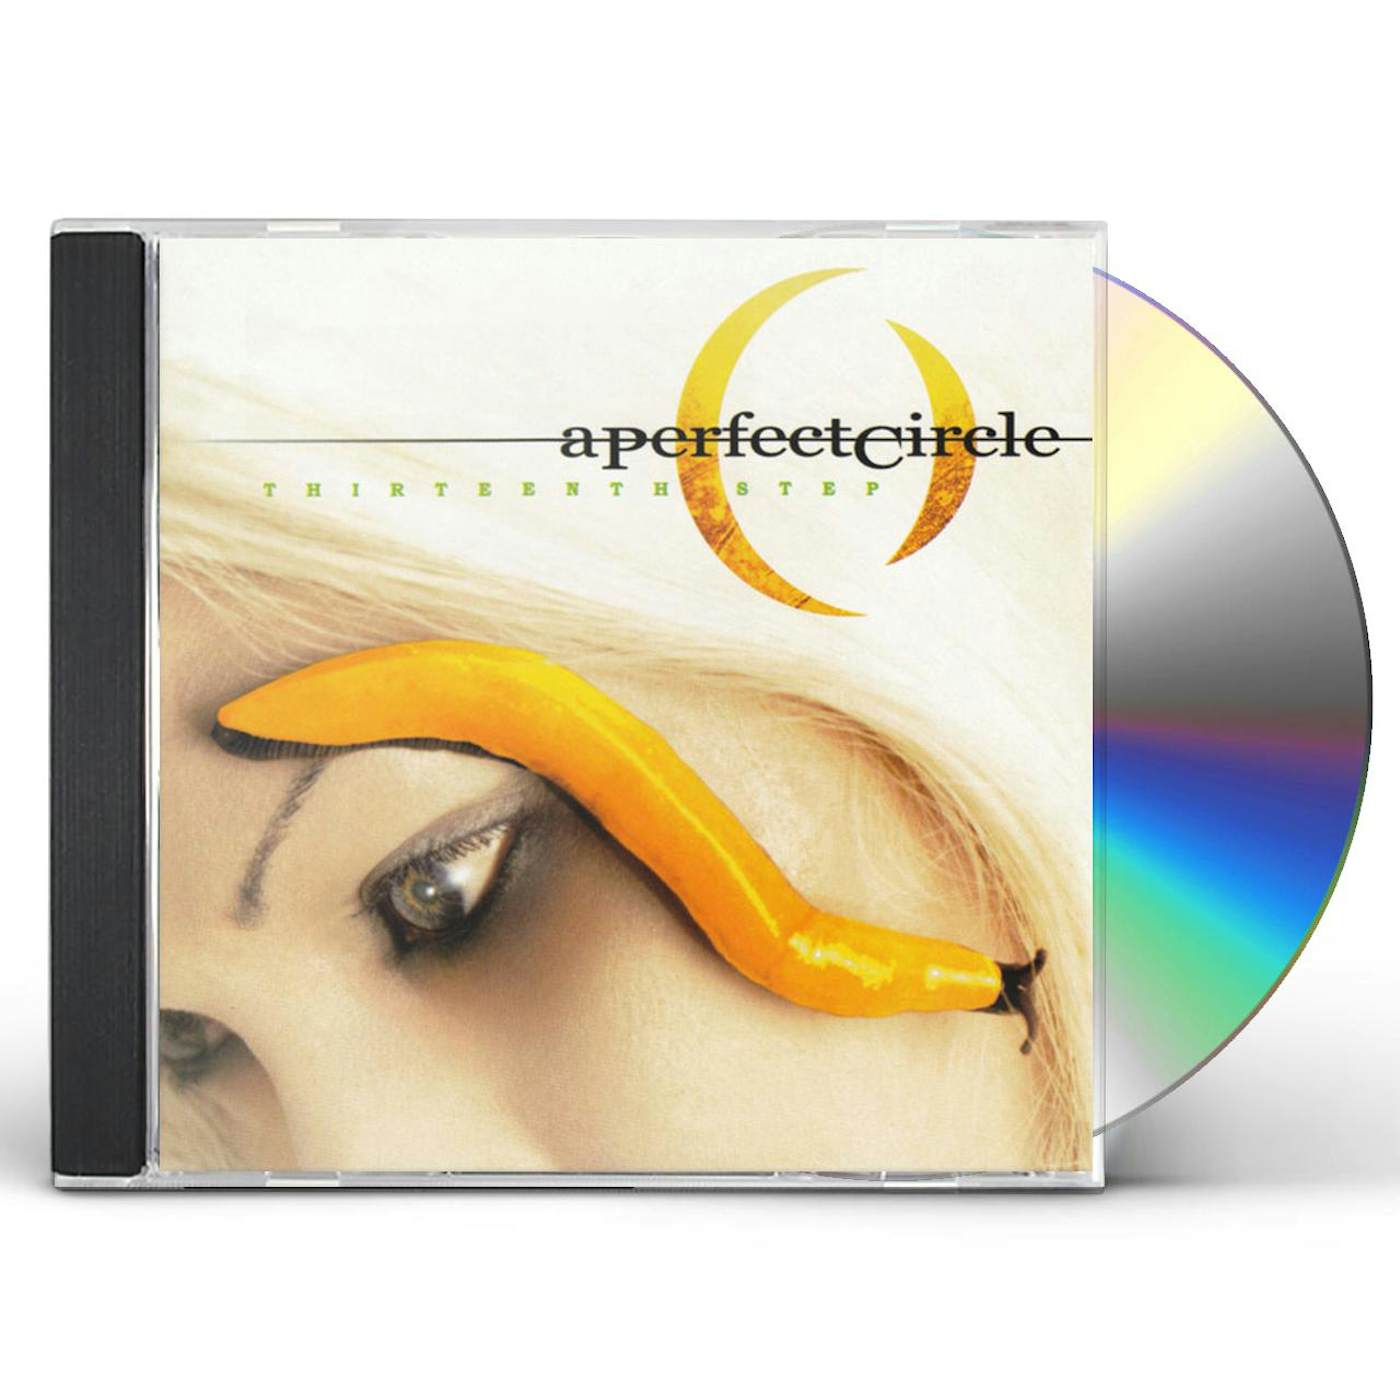 A Perfect Circle THIRTEENTH STEP CD